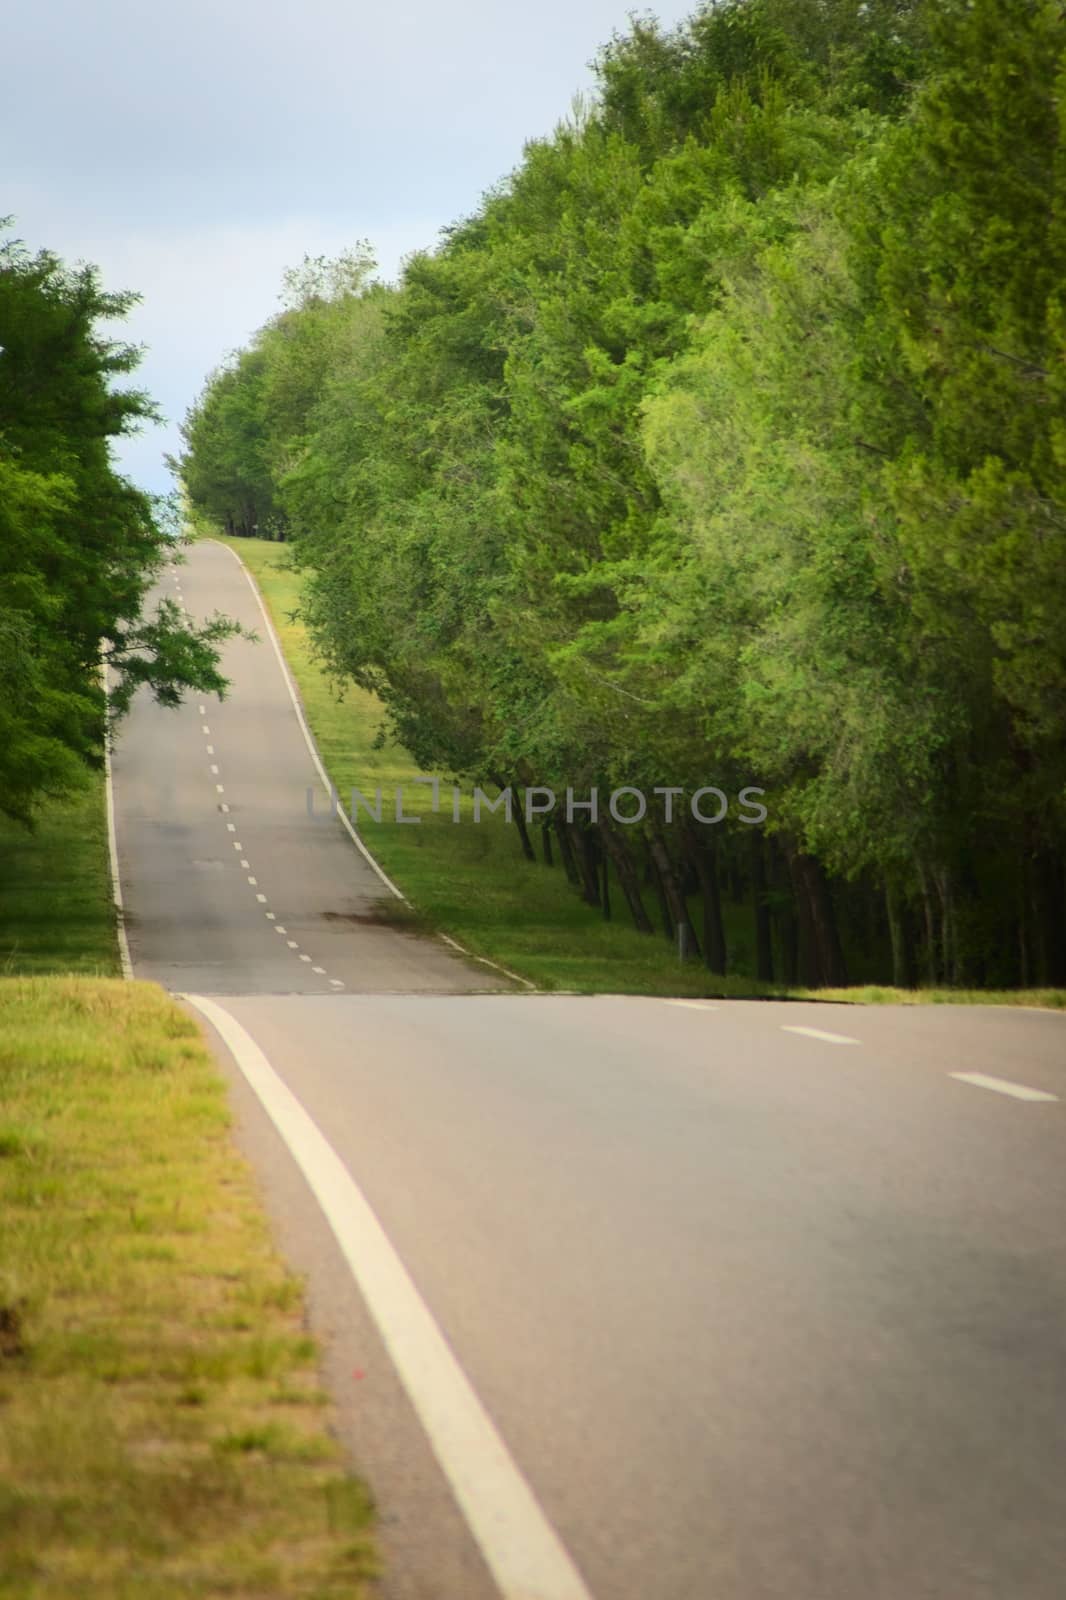 Undulating road on a hillside in a wooded area by hernan_hyper